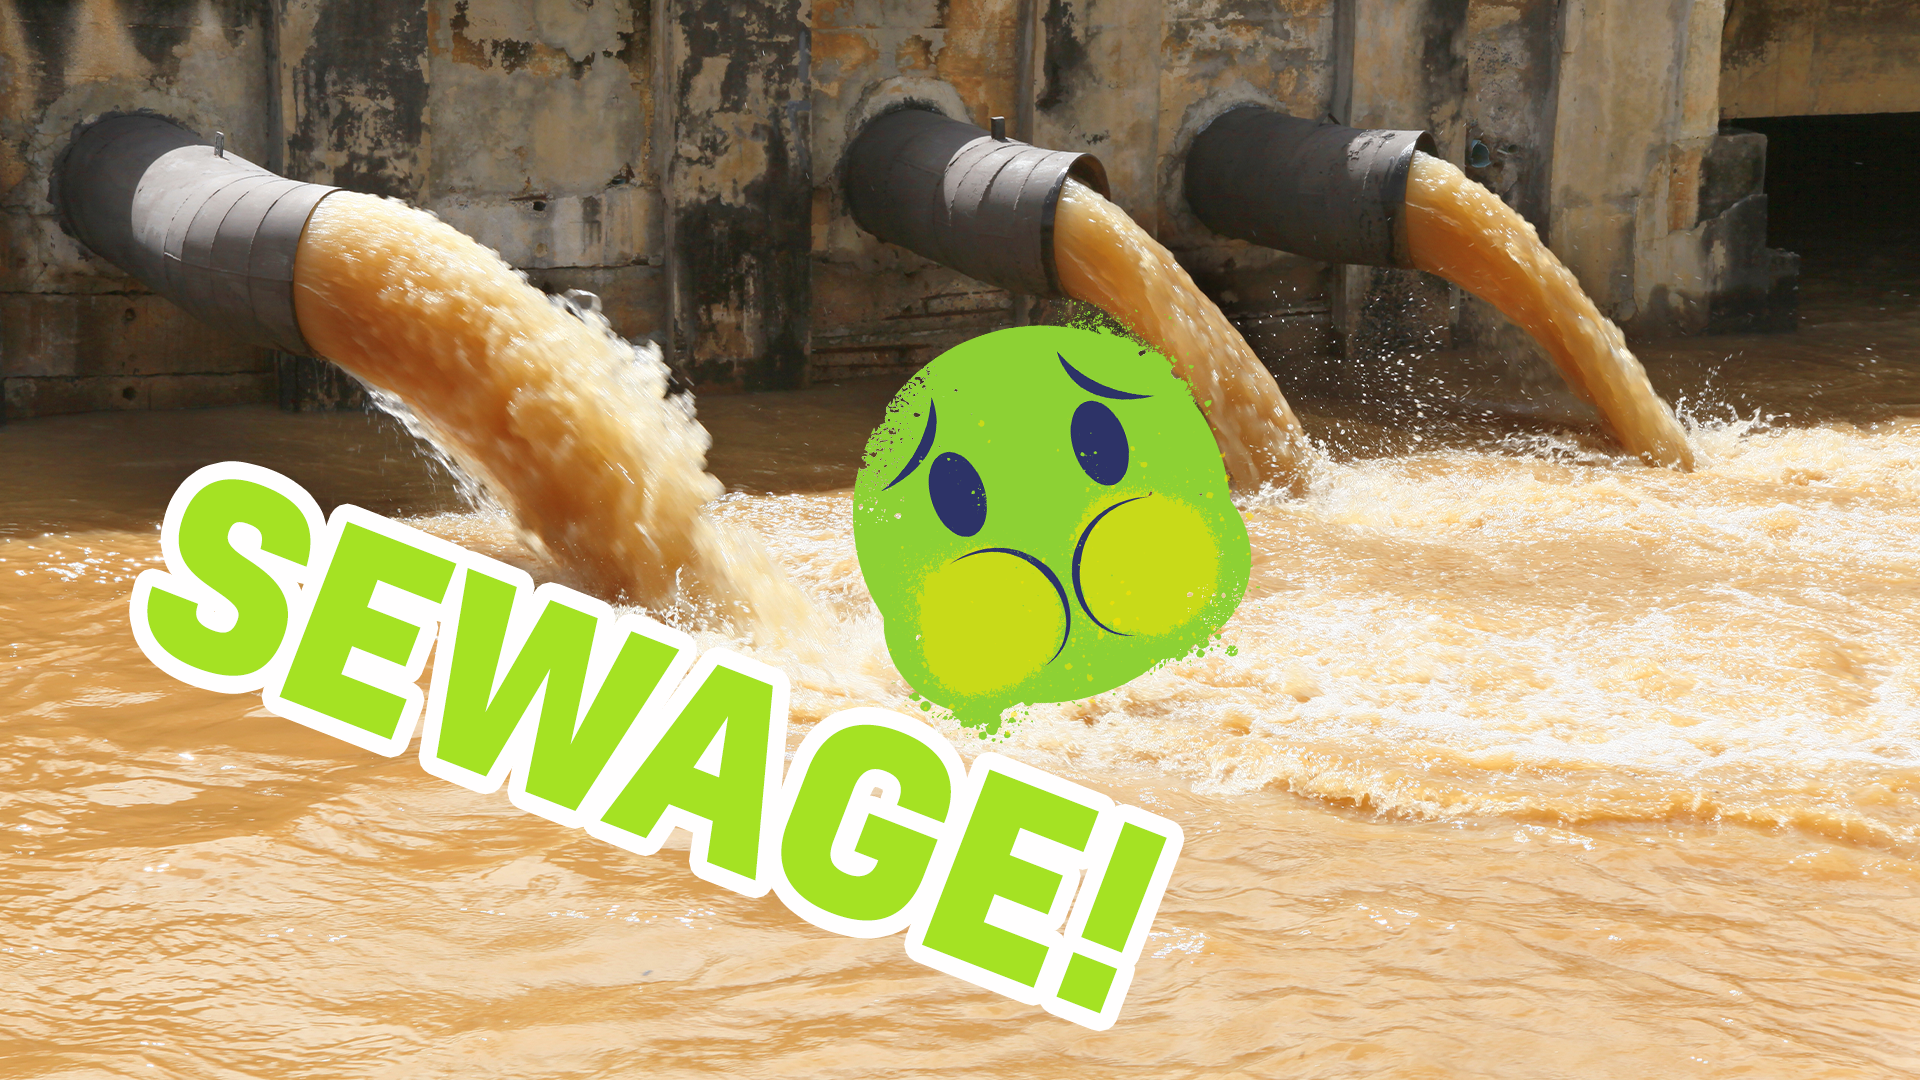 Sewage result with green emoji